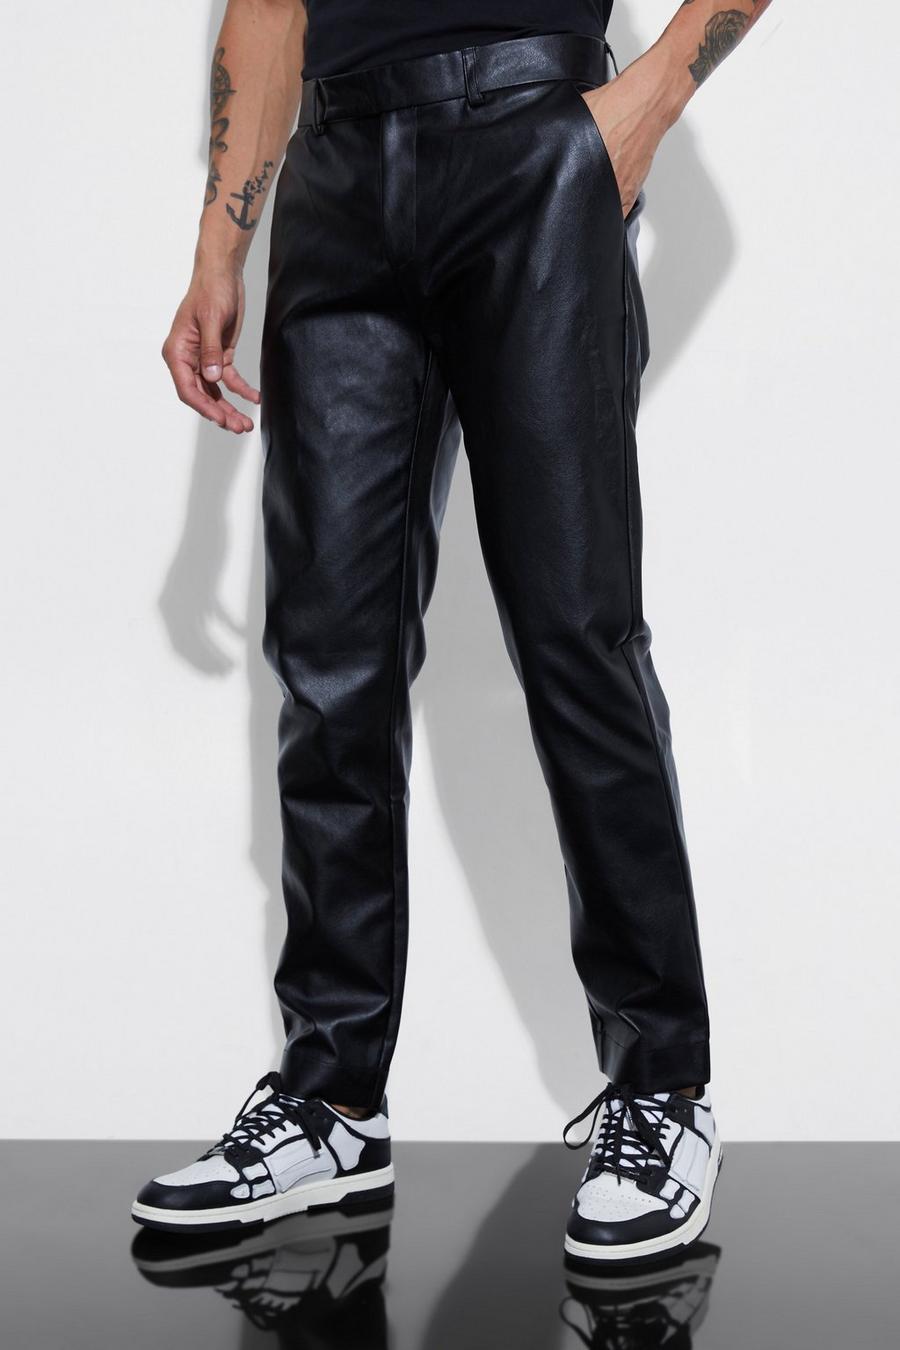 Pantaloni Slim Fit in PU, Black negro